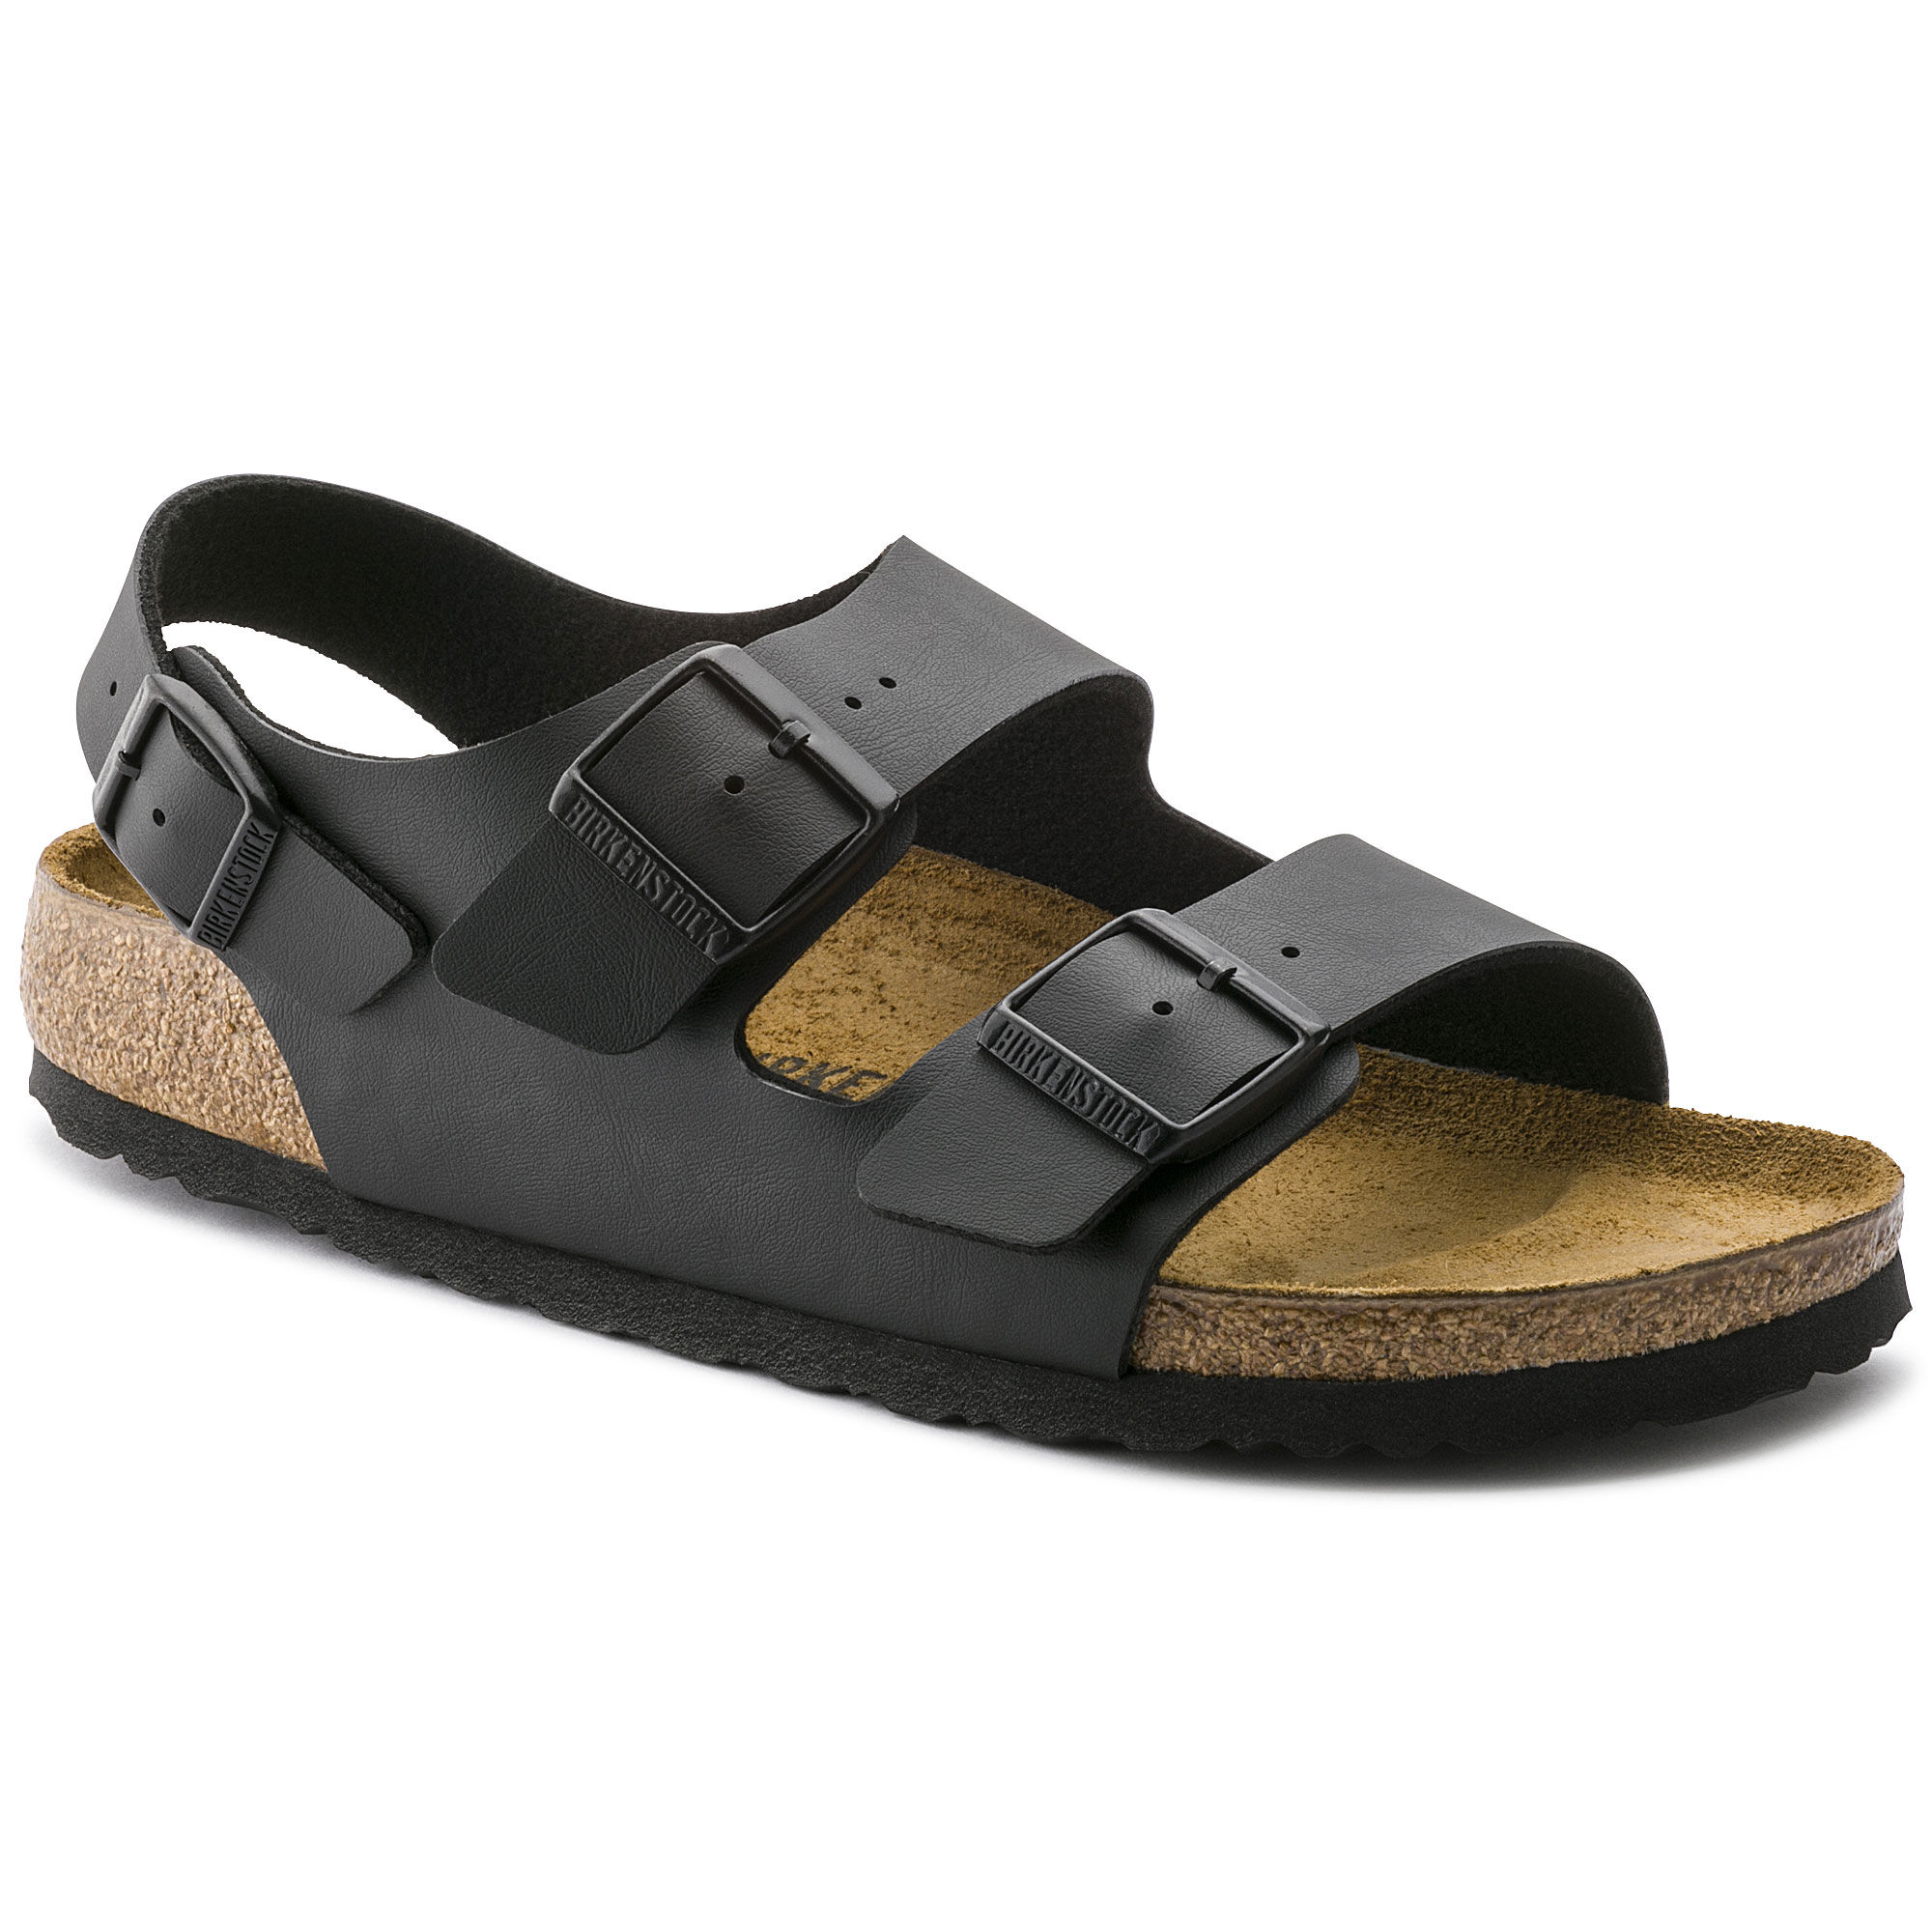 Men's sandals with backstraps | shop at 